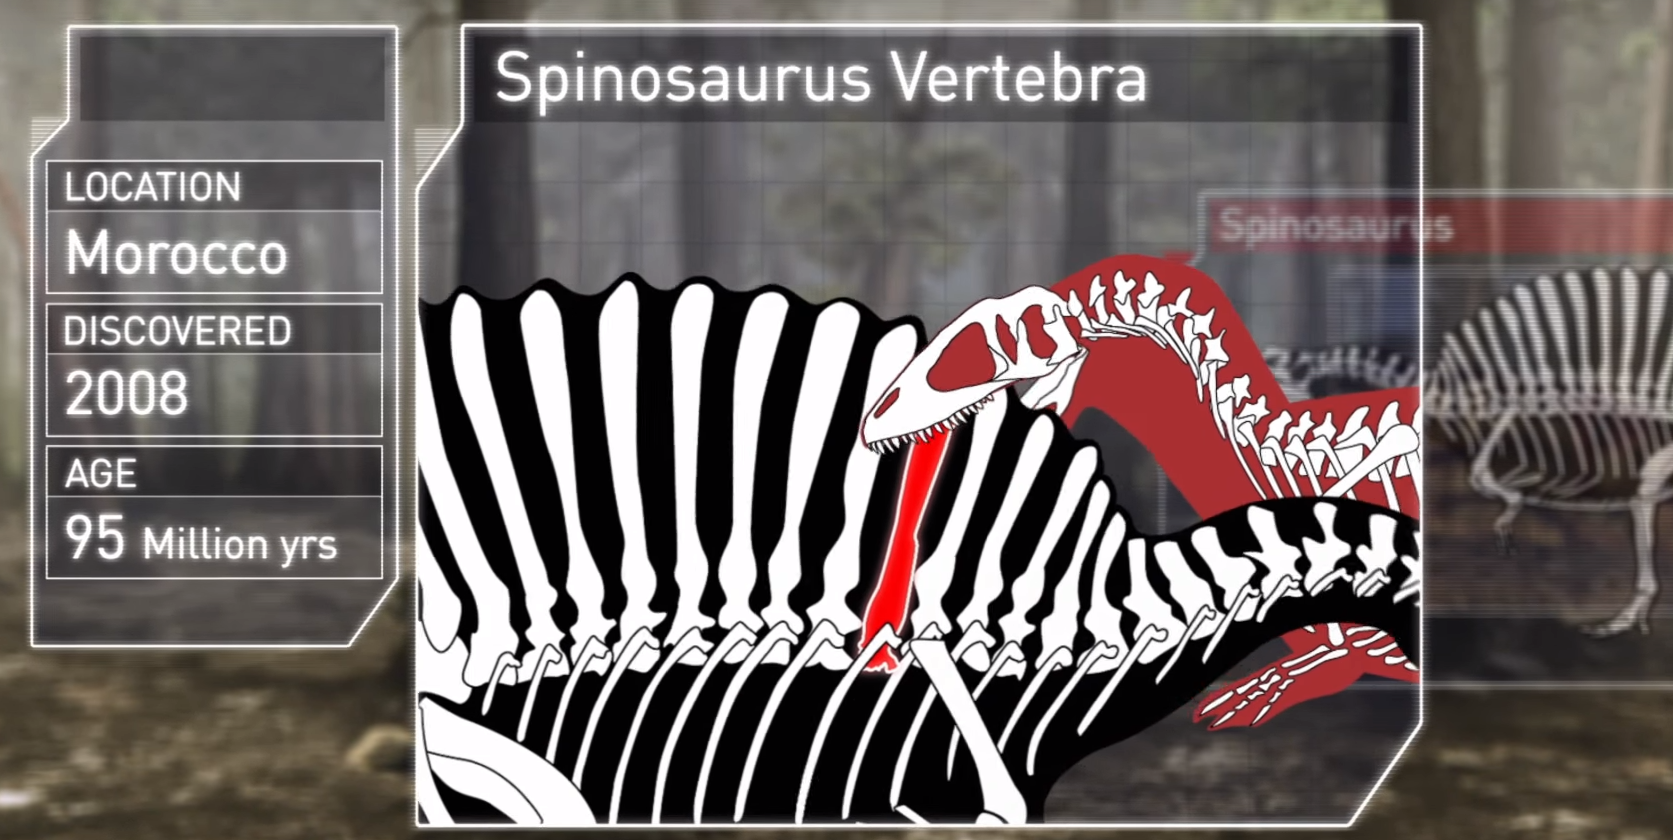 Spinosaurus vertebra2.png